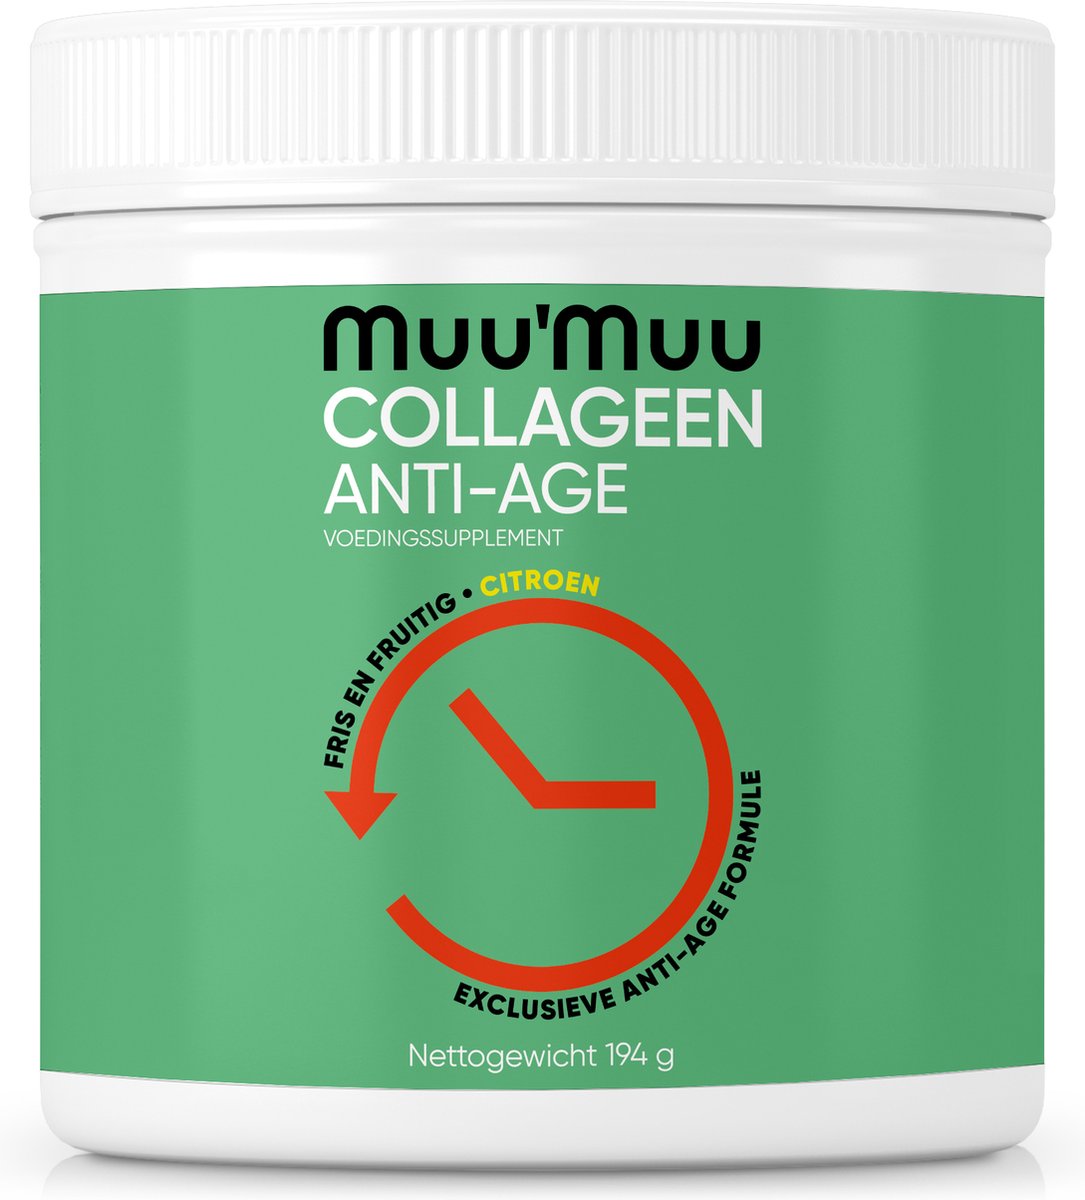 Lee Steen stormloop Muu'Muu Collageen Poeder 5000 mg - 30 Doseringen - Anti-Age - Viscollageen  Supplement... | bol.com